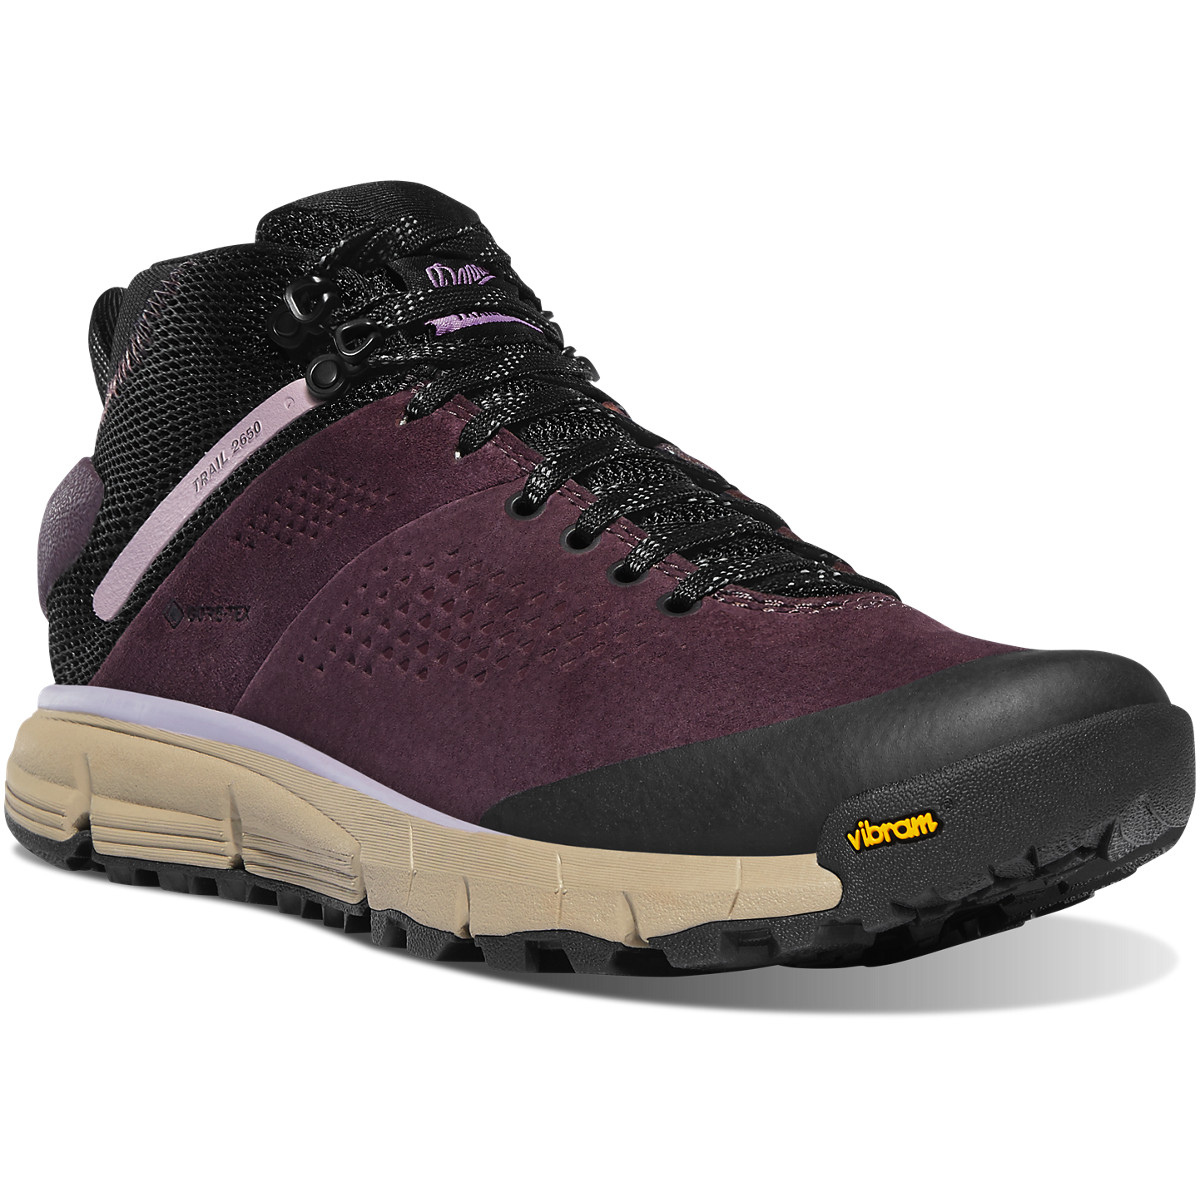 Details about   Danner 61244 Women's Trail 2650 GTX Mid Dark Marionberry Waterproof Hiking Shoes 